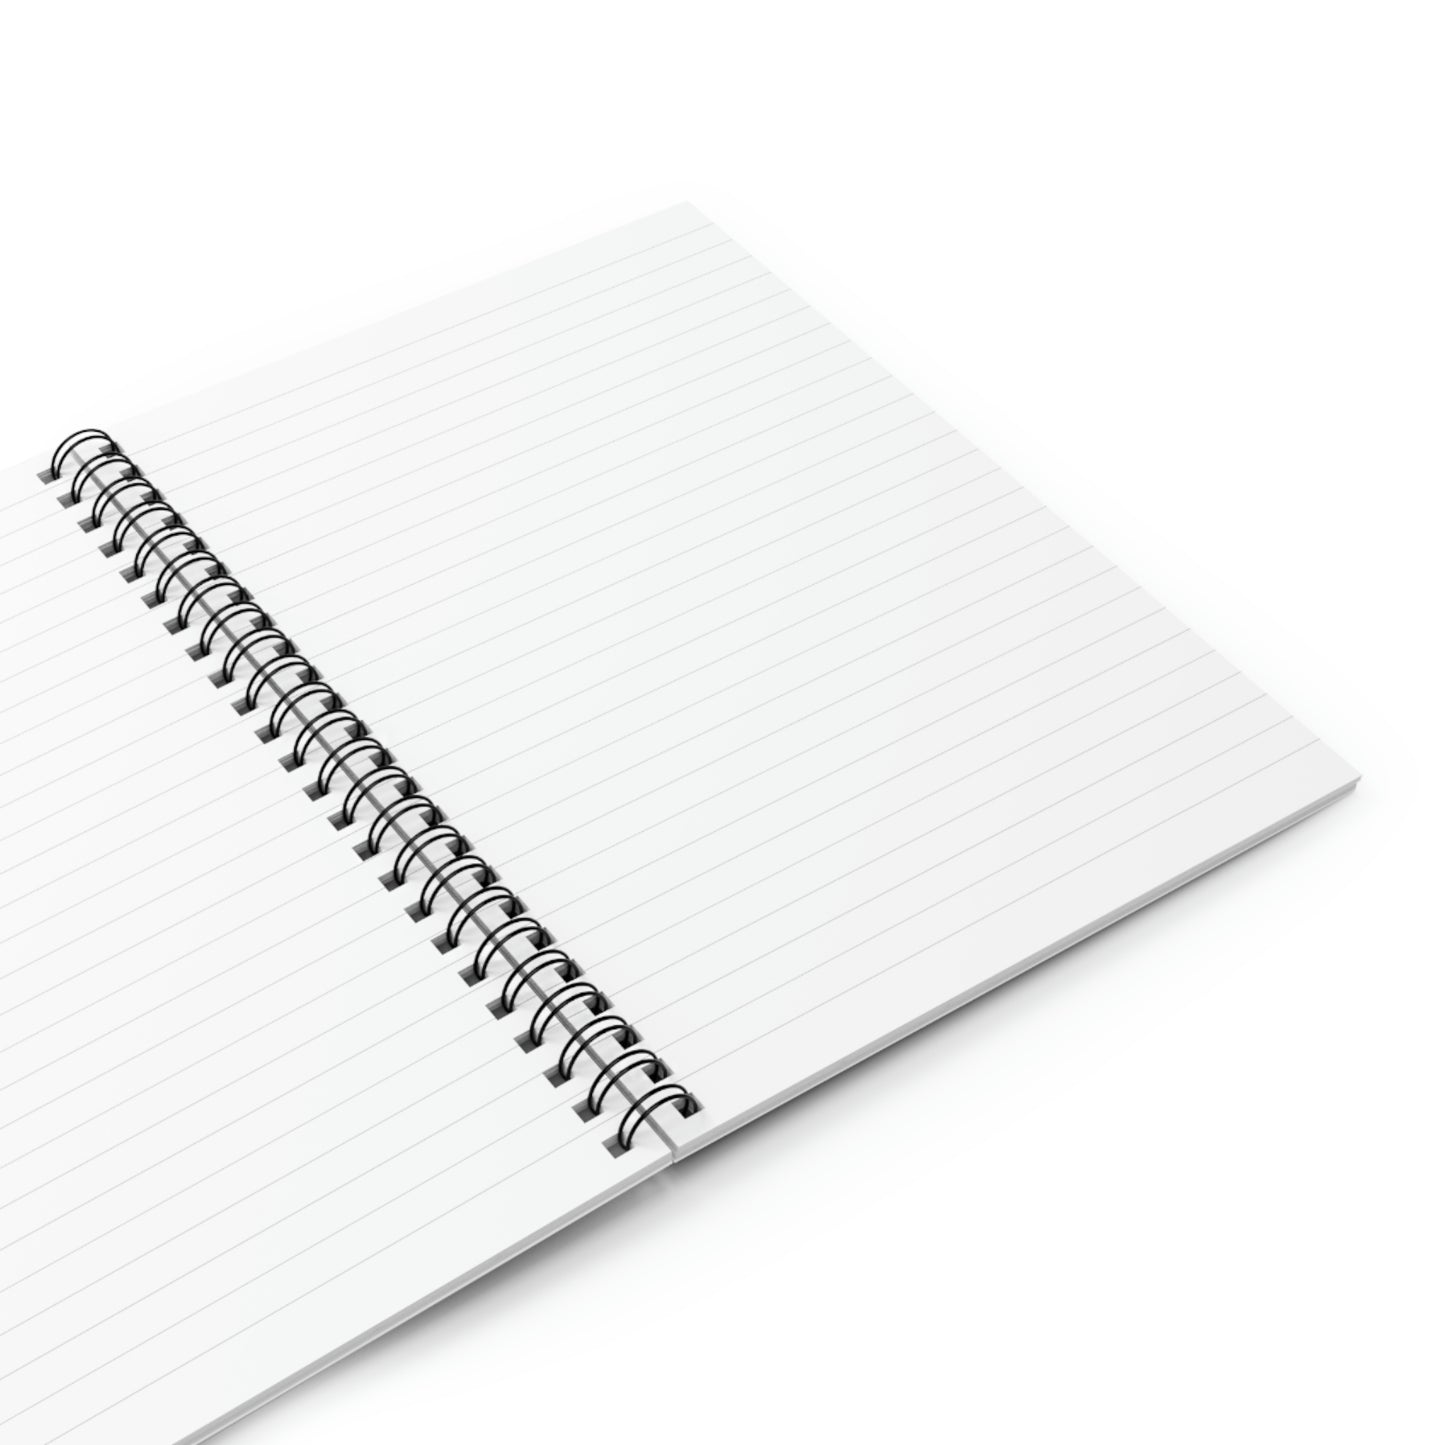 DM Spiral Notebook - Ruled Line